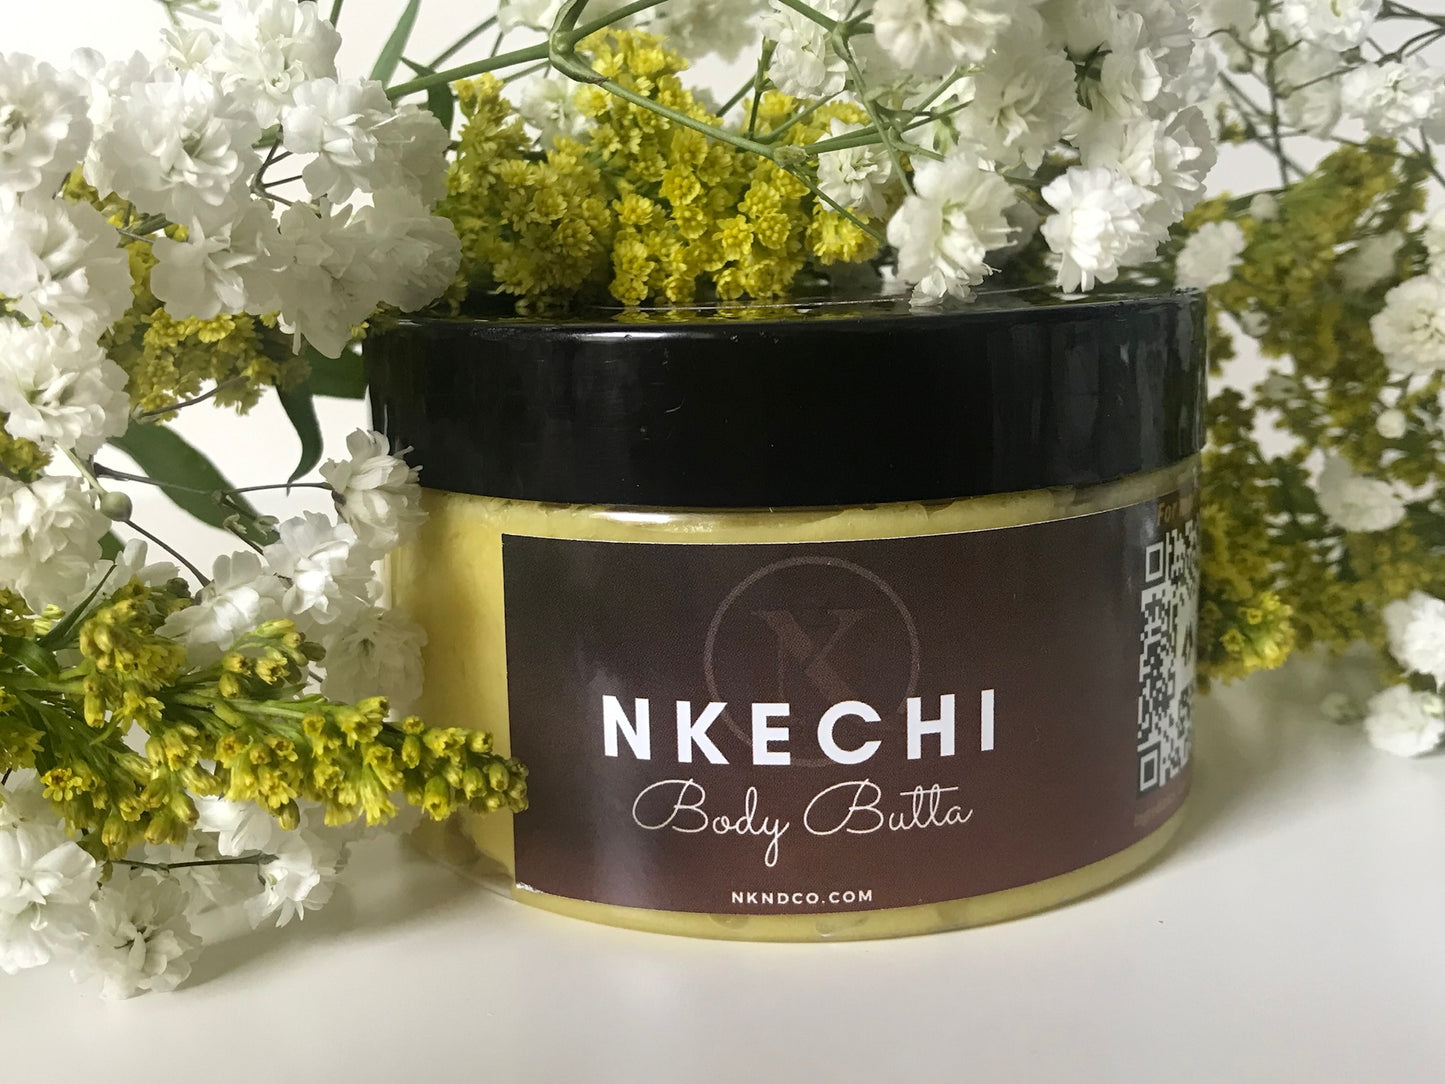 "Nkechi" Body Butter